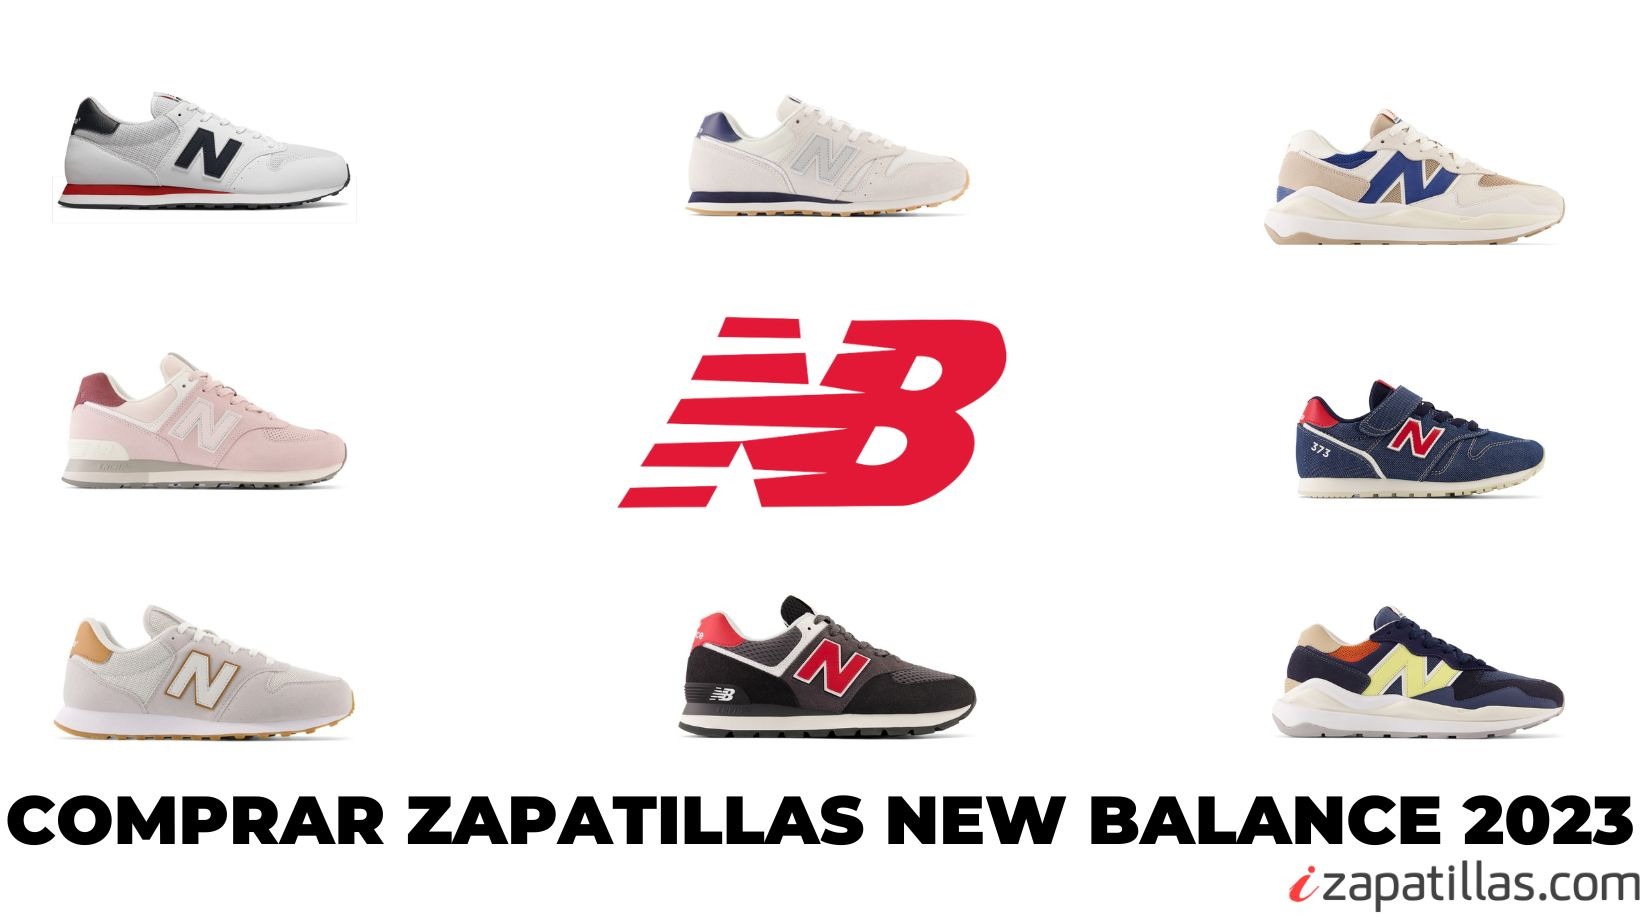 Comprar Zapatillas New 2023 // Comprar Zapatillas New baratas // Zapatillas New Balance online.